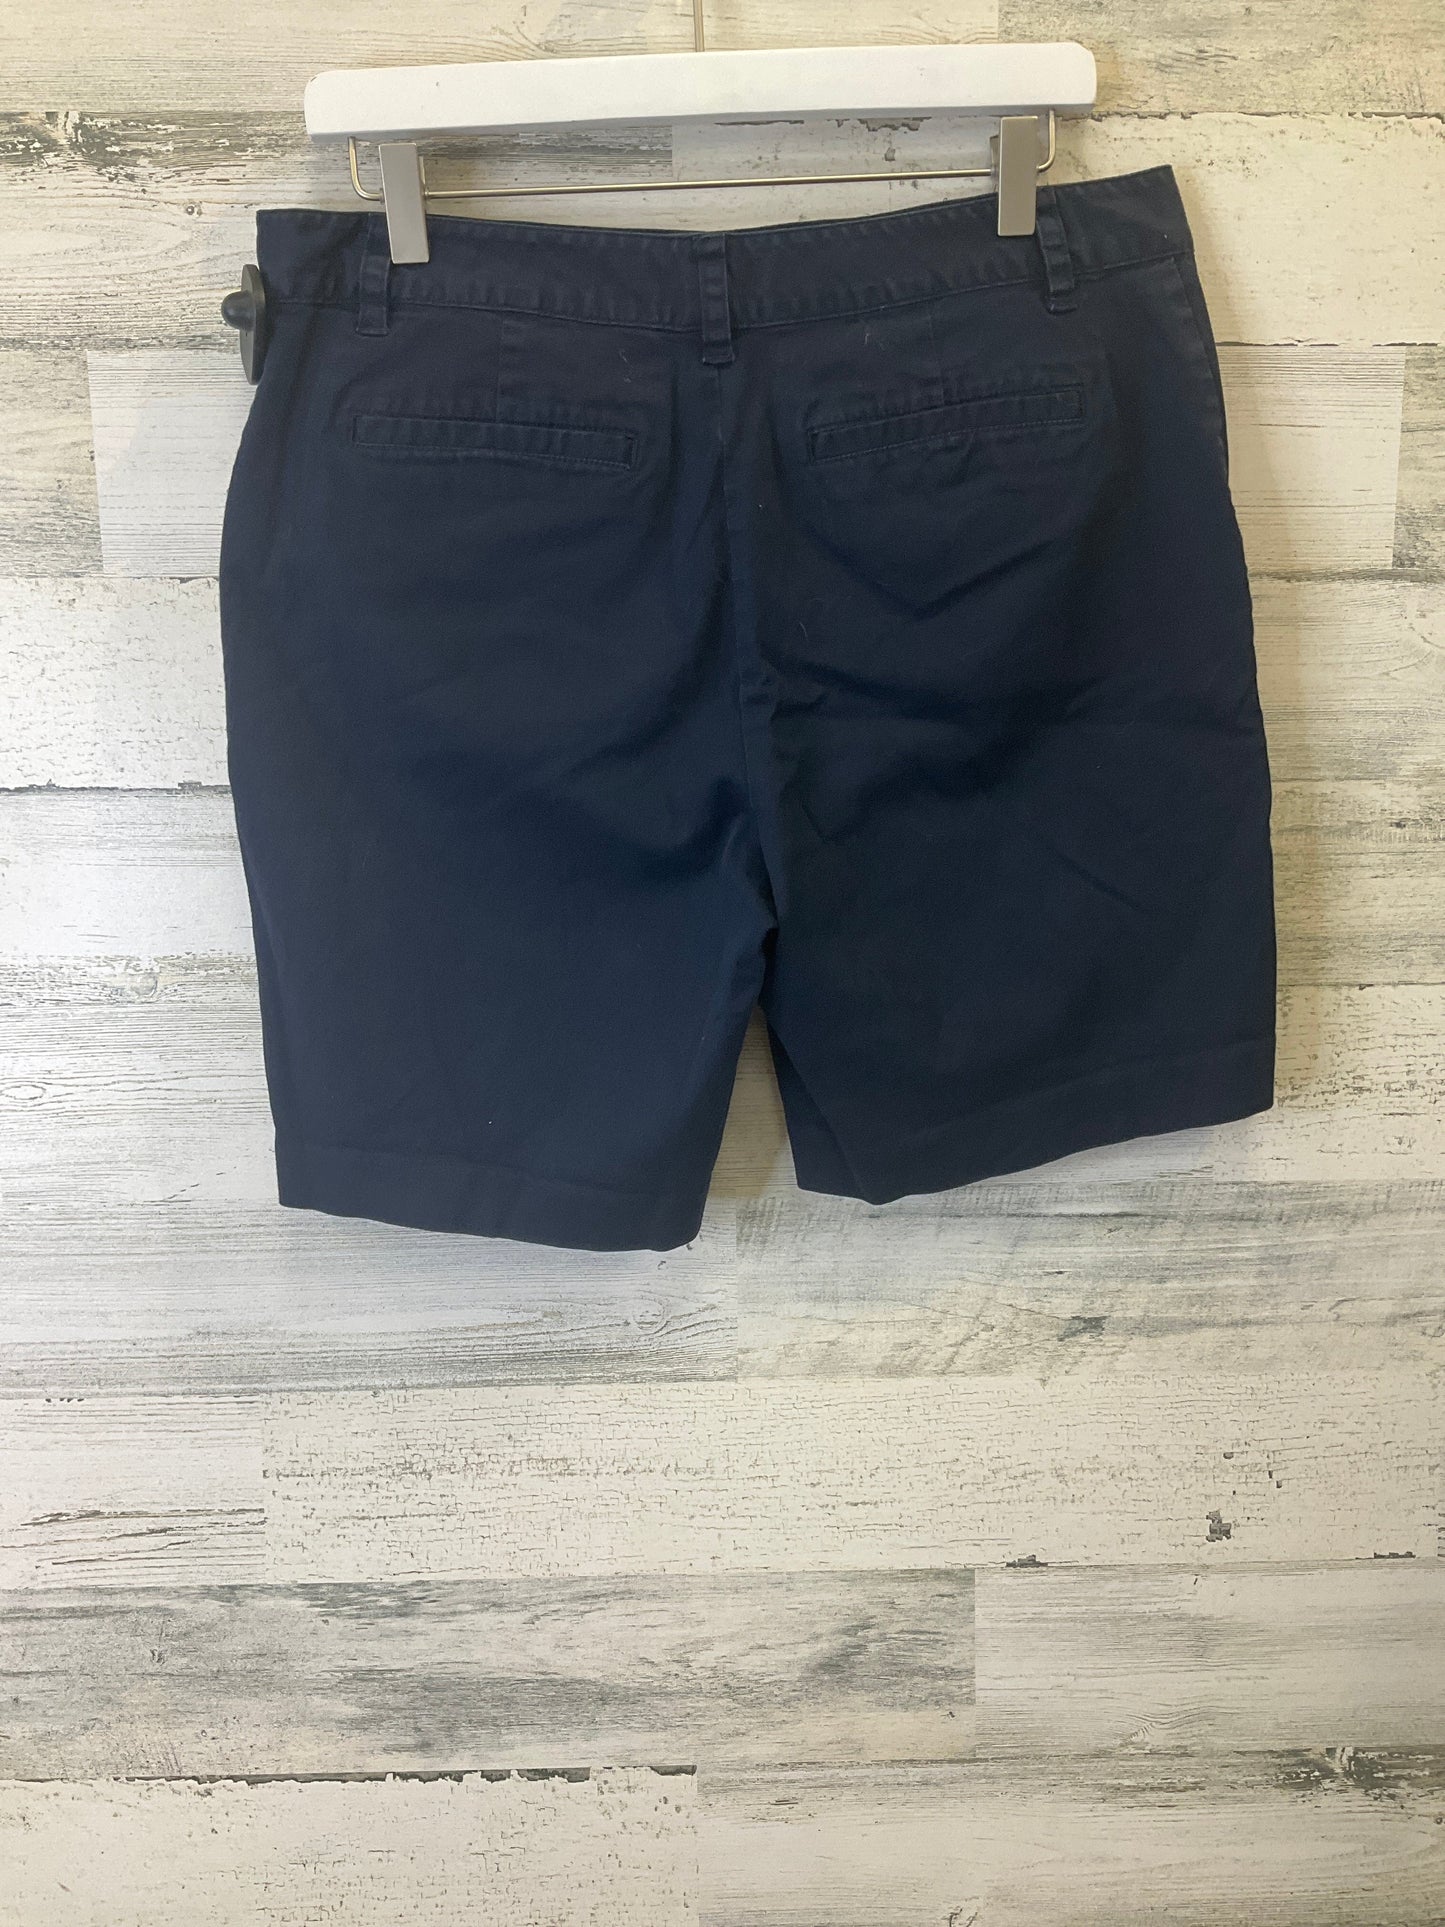 Navy Shorts Chaps, Size 12petite